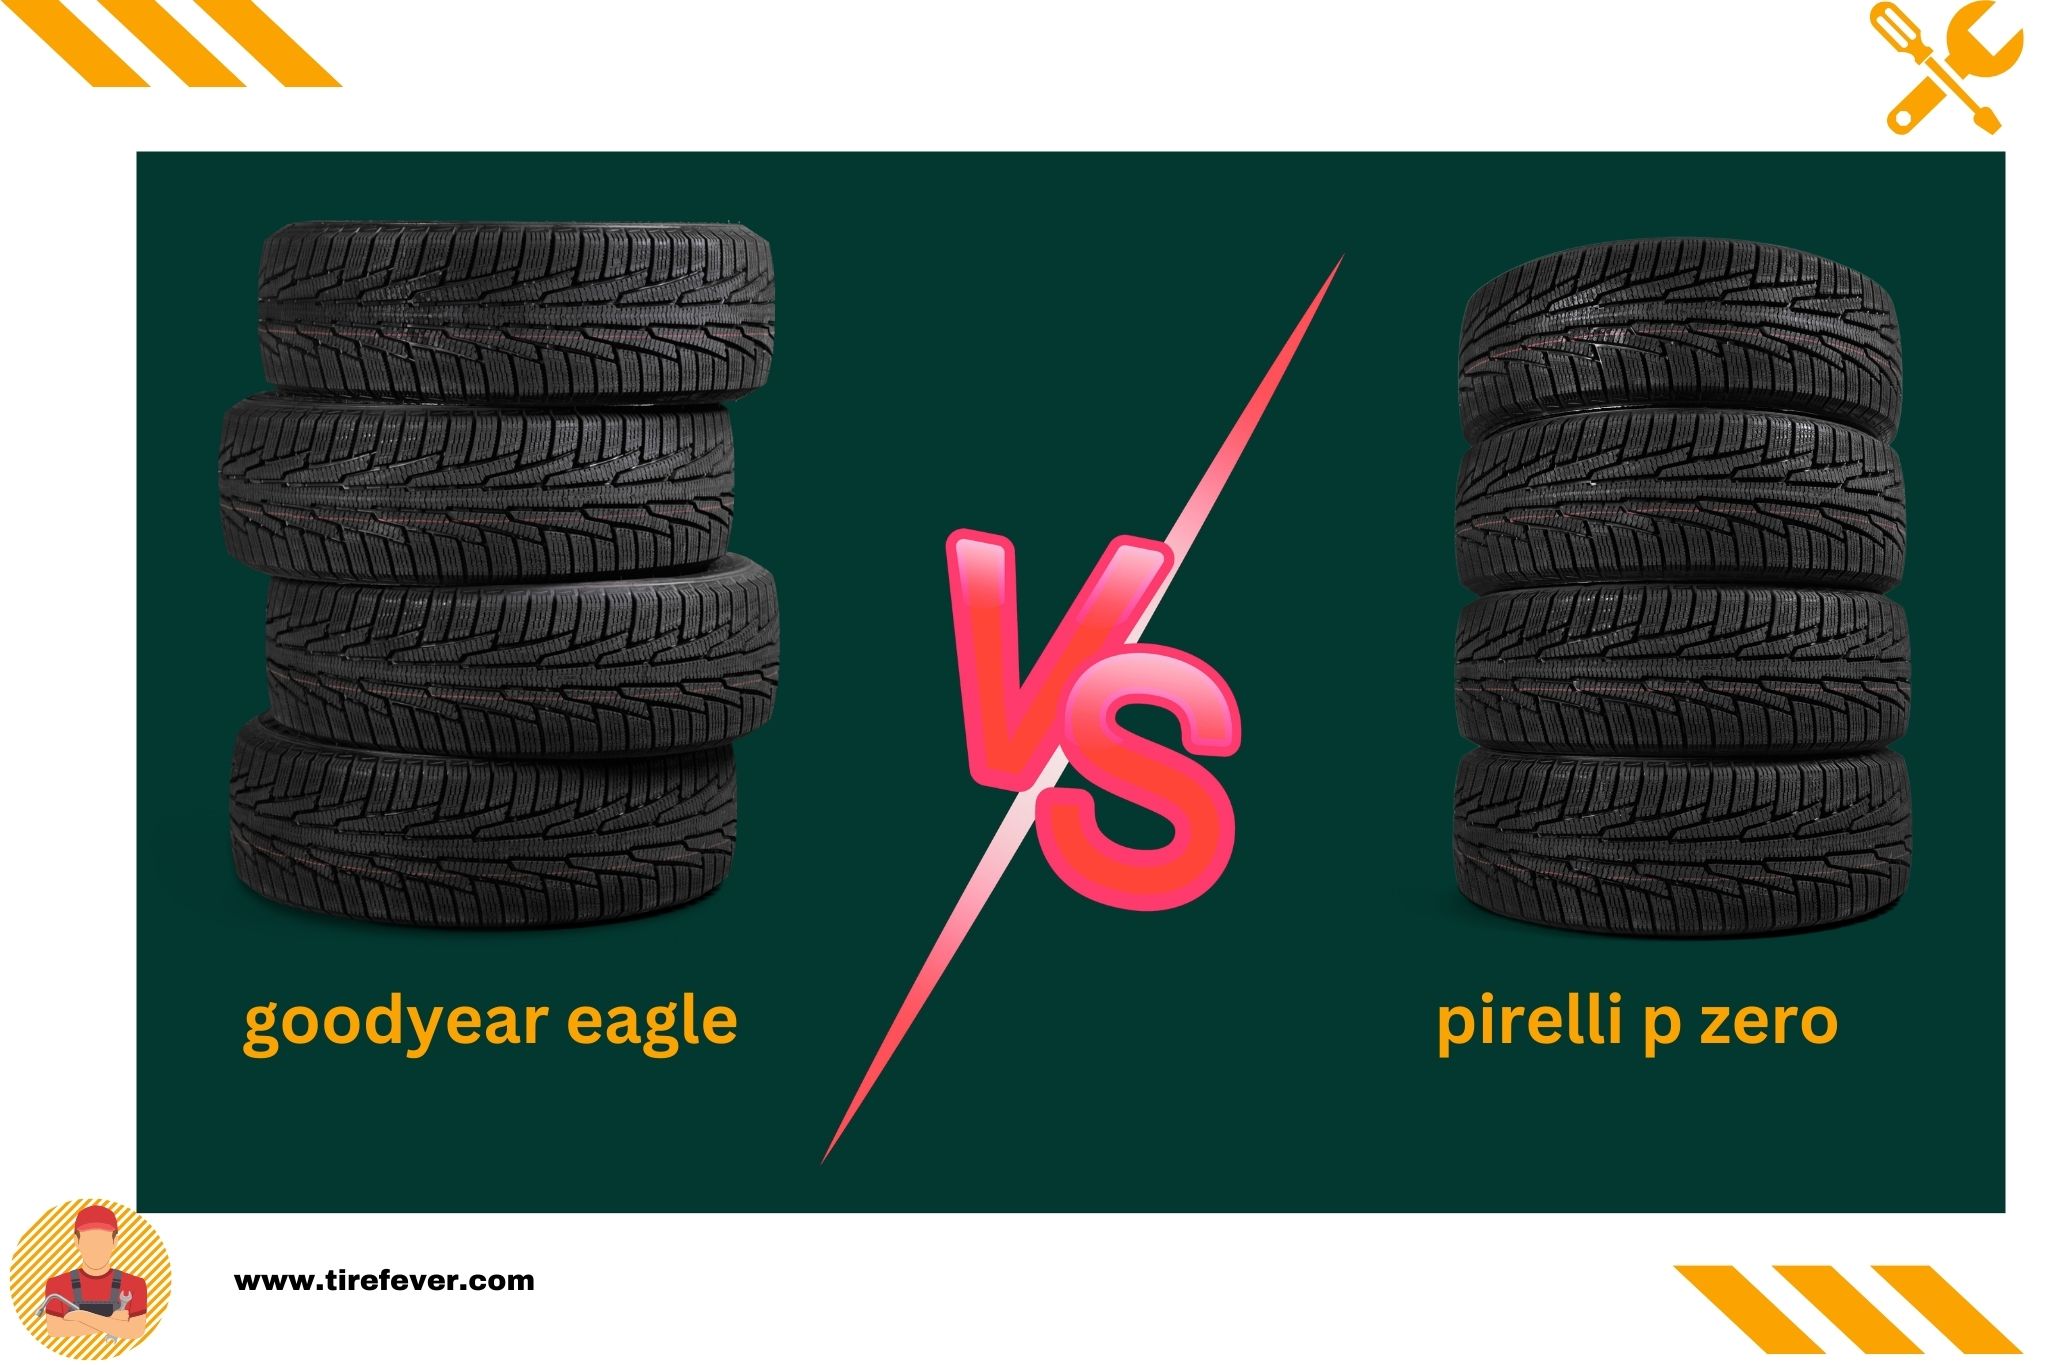 goodyear eagle vs pirelli p zero